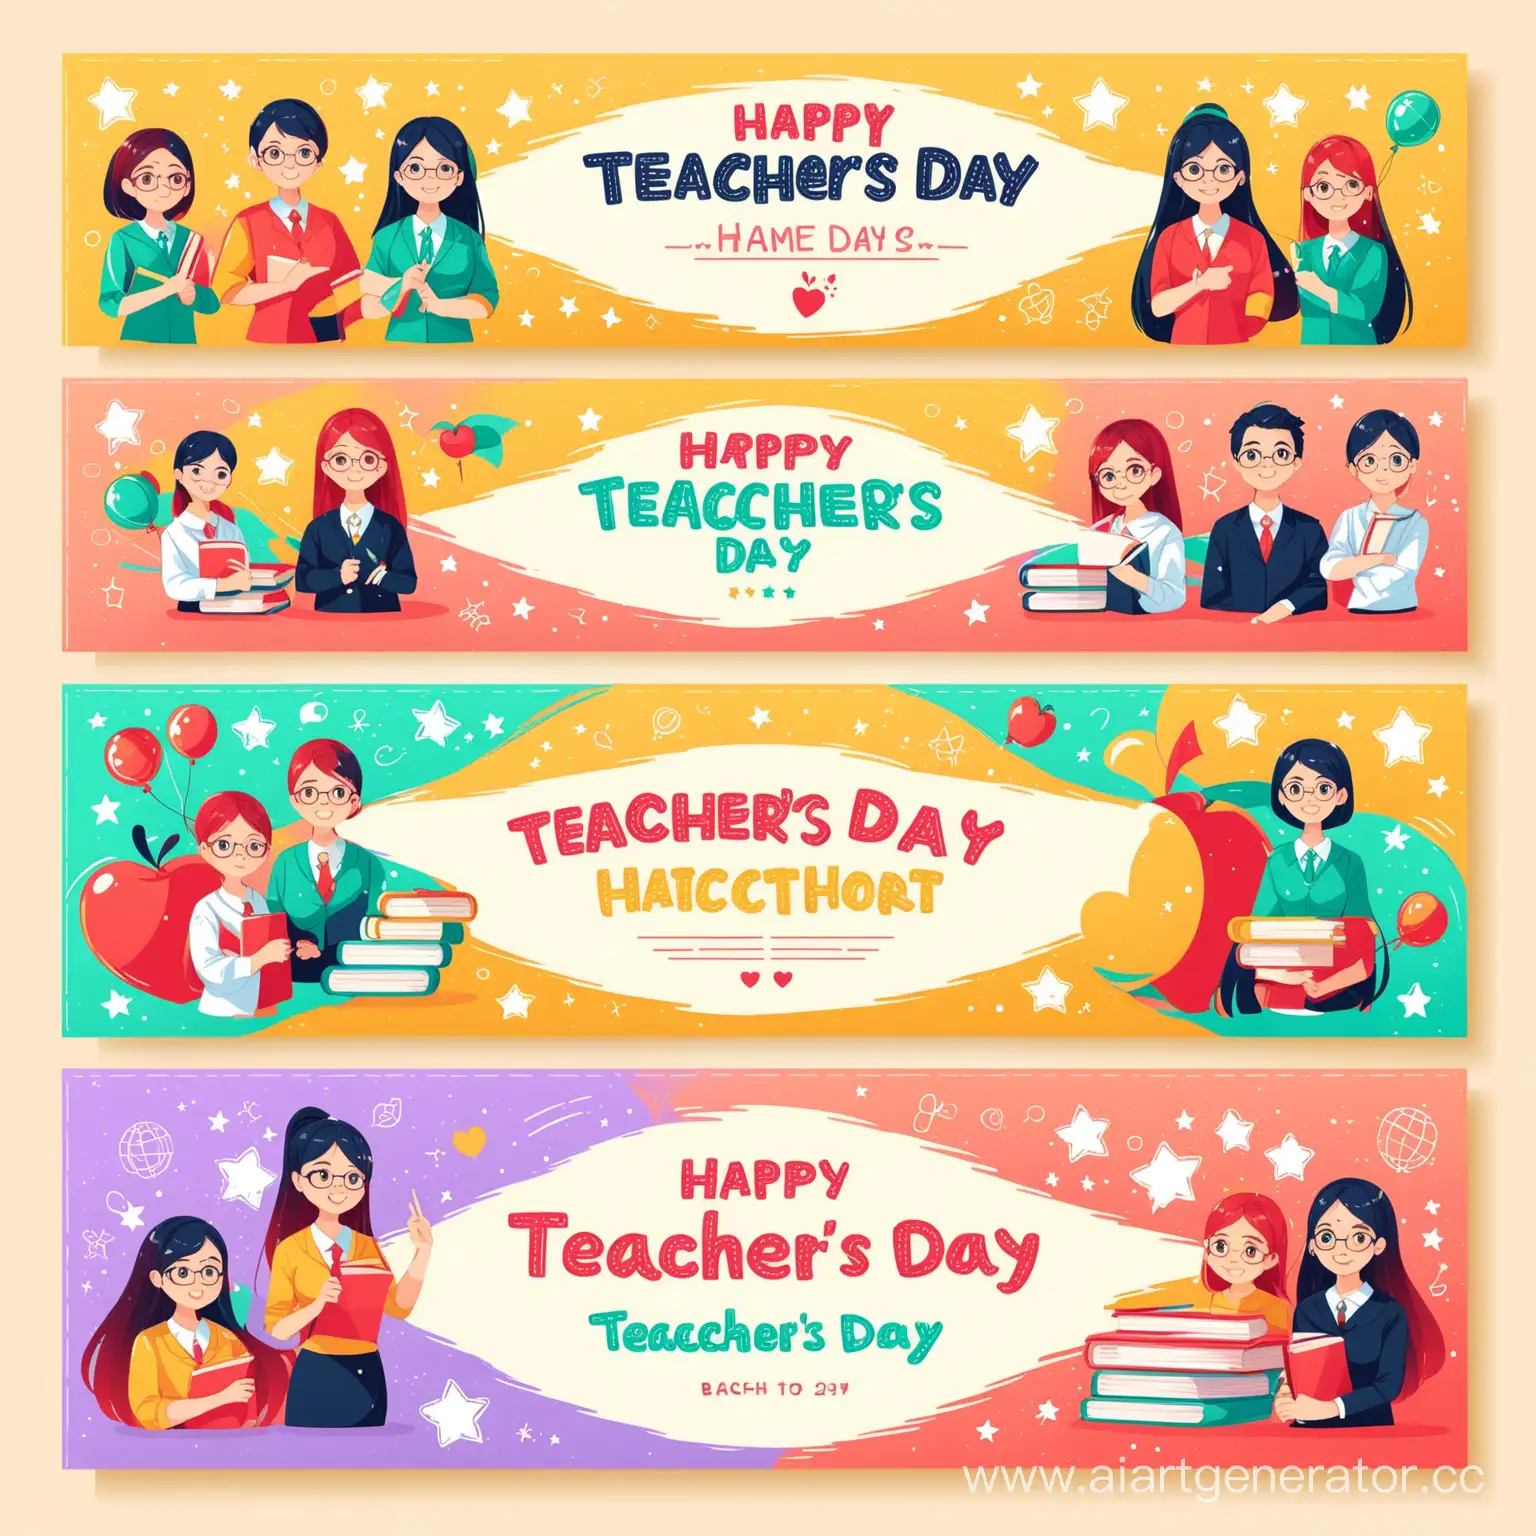 HandDrawn-Flat-Teachers-Day-Banners-Vibrant-Horizontal-Designs-Celebrating-Educators